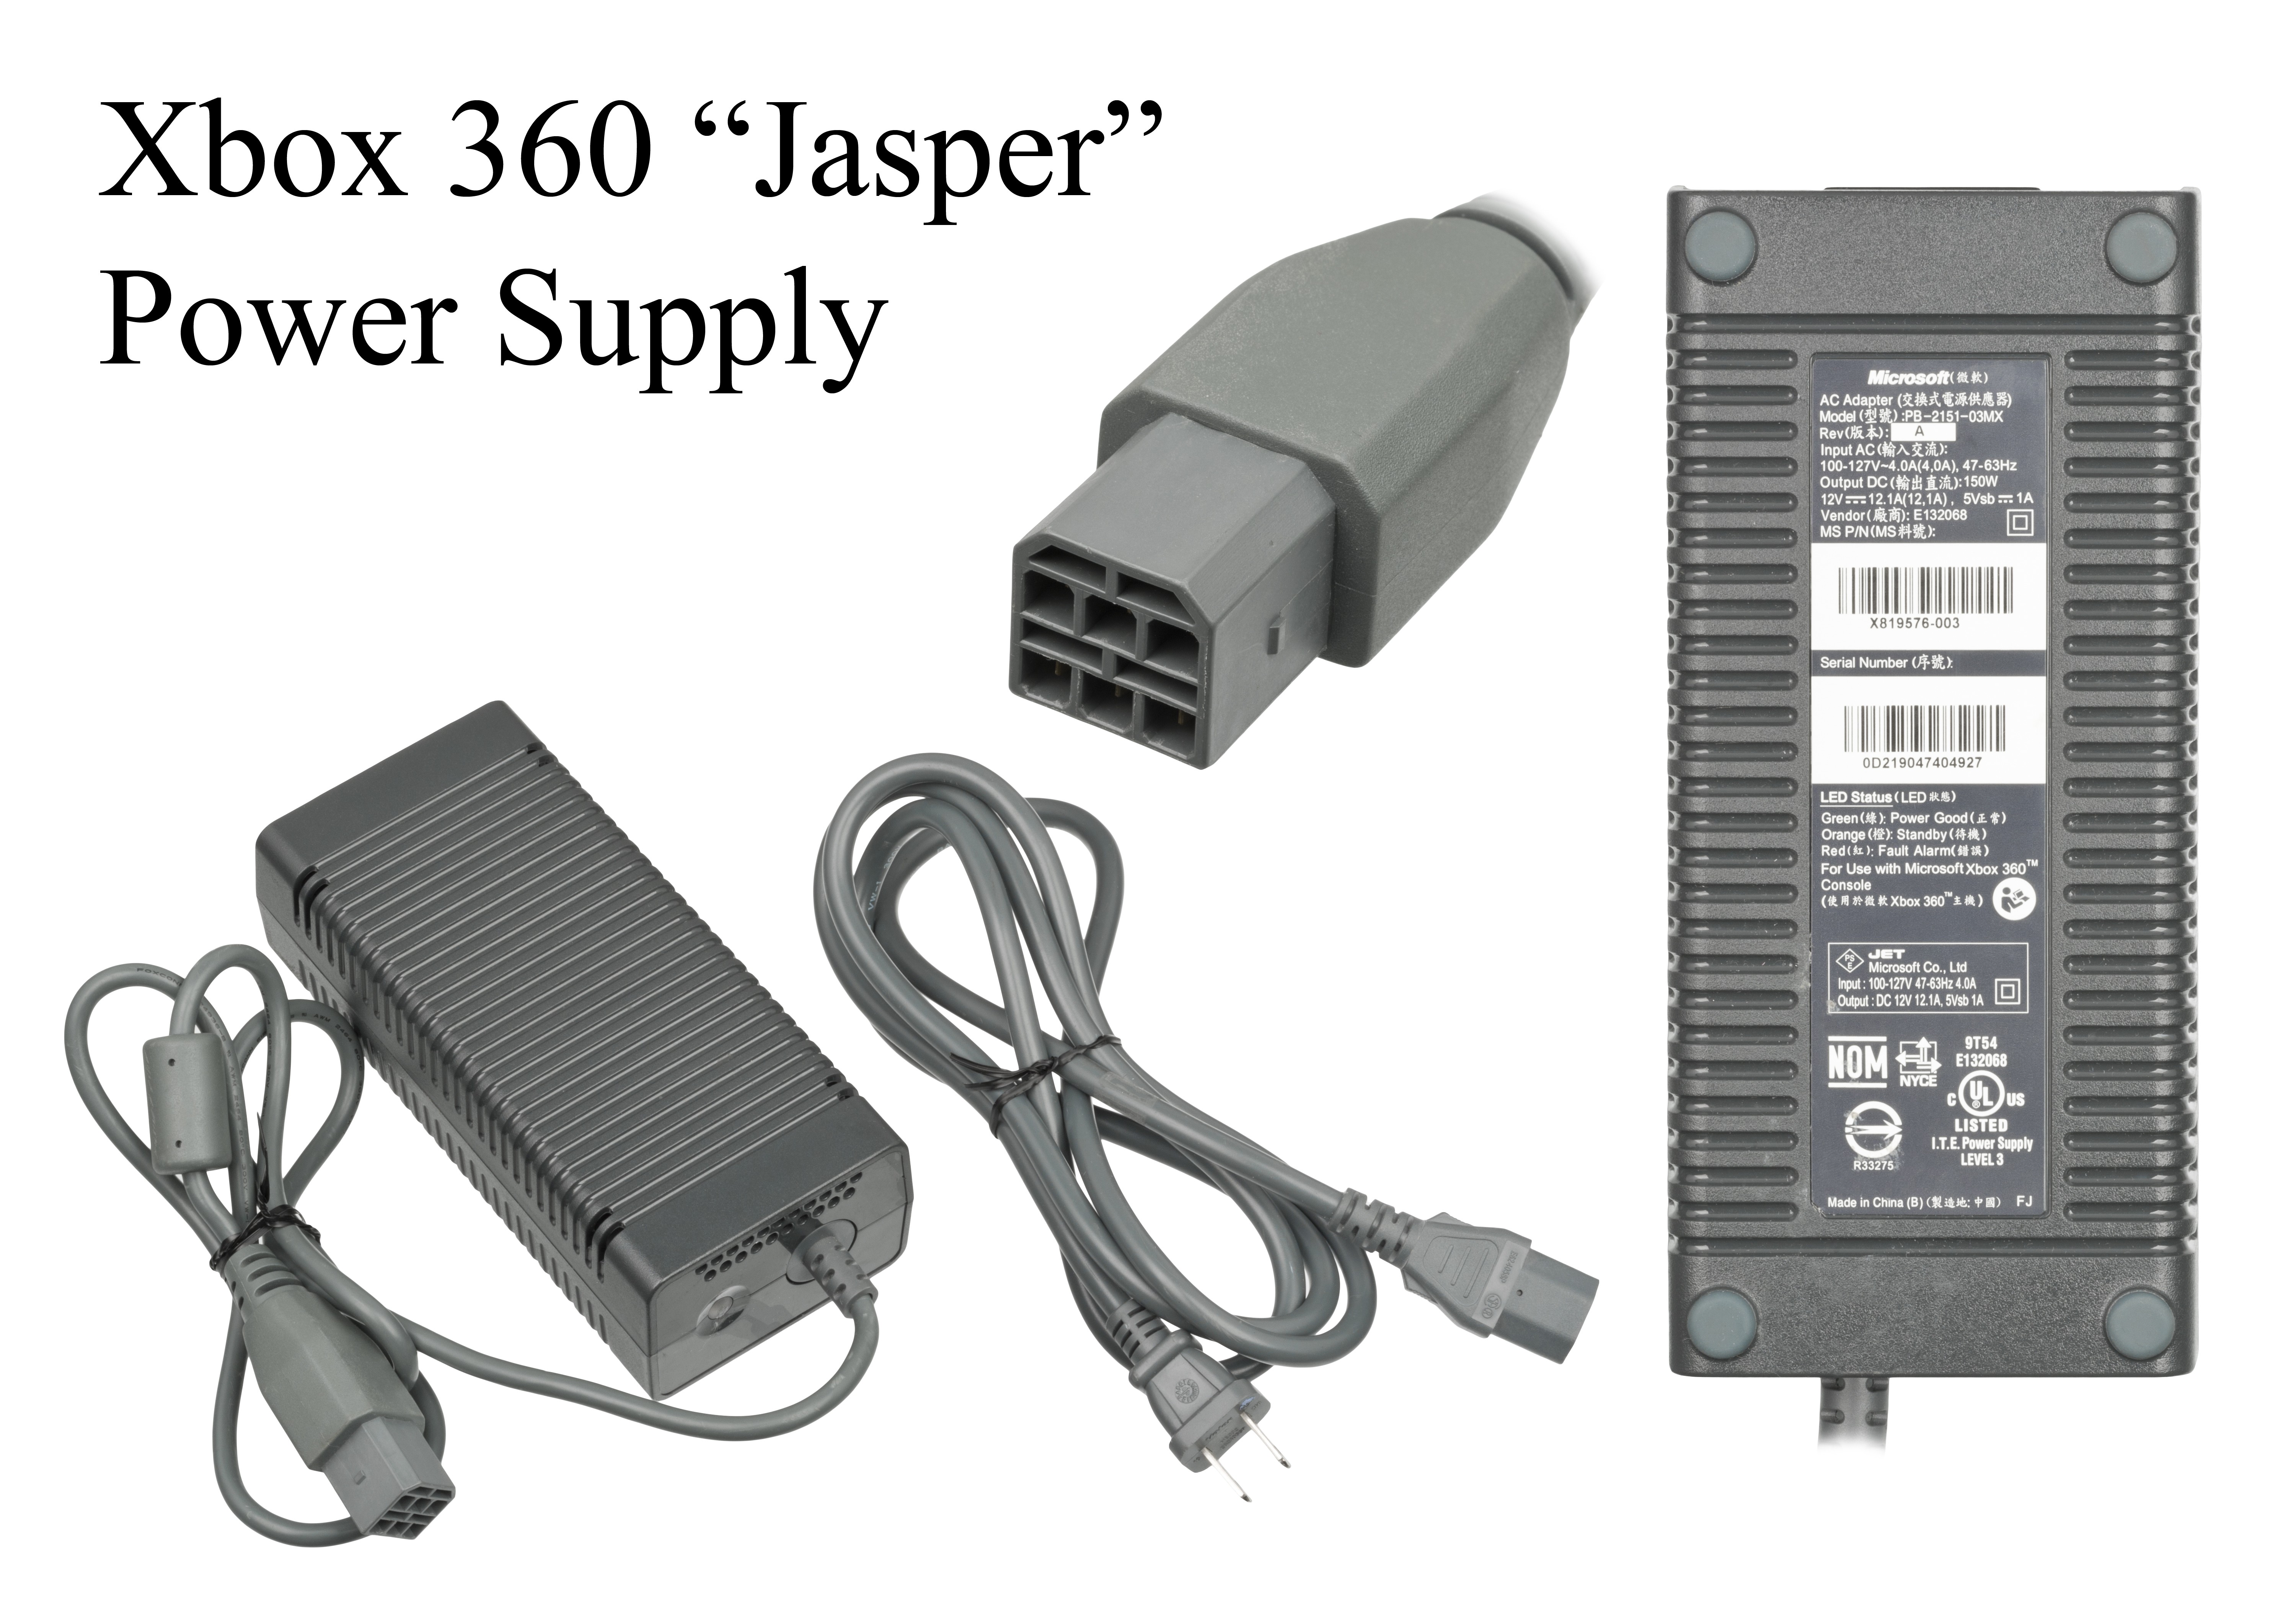 Xbox 360 Power Supply Pinout File Microsoft Xbox 360 Power Supply Jasper Wikimedia